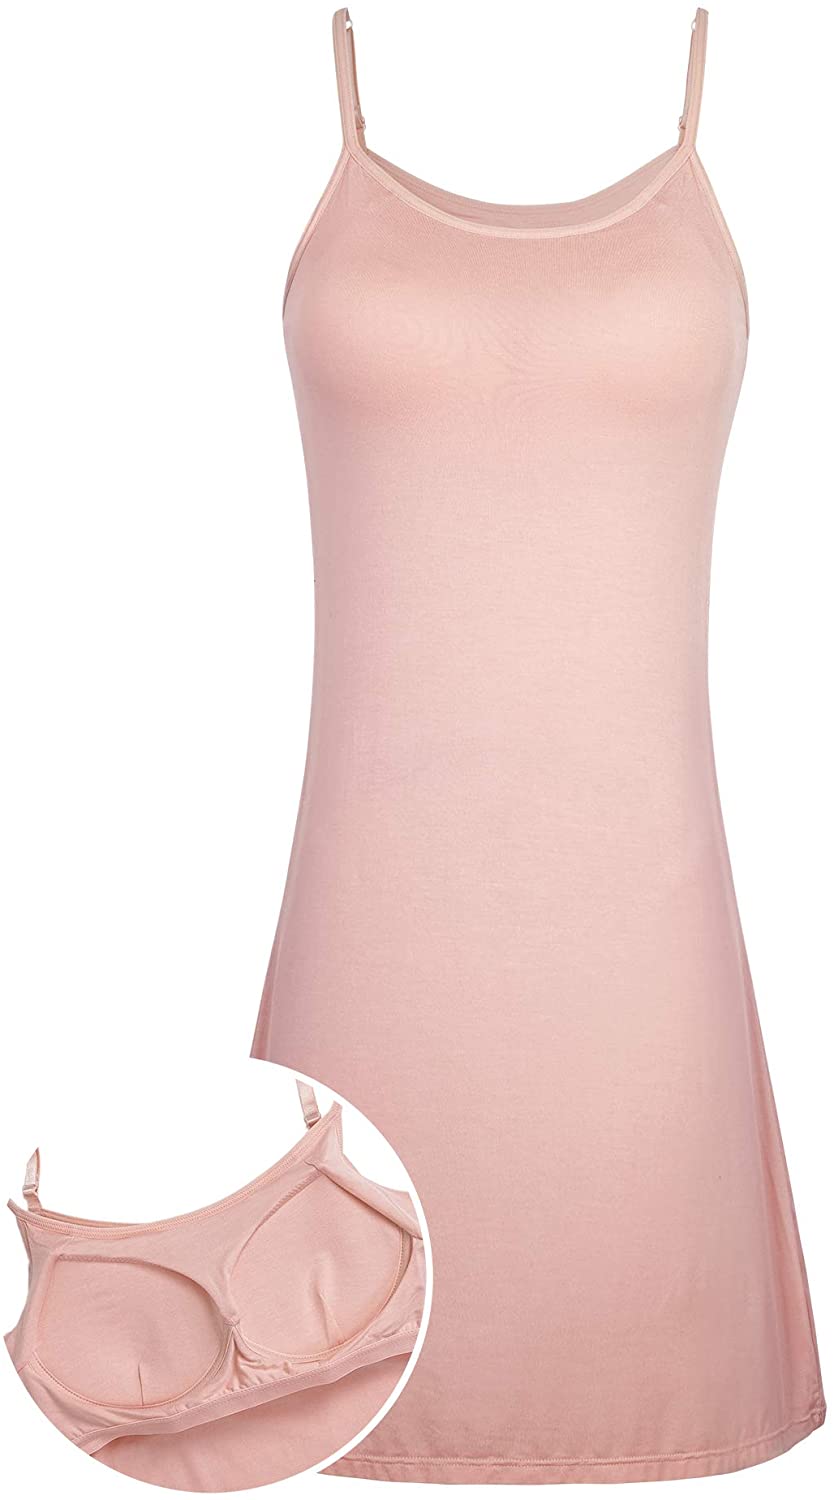 DYLH Women Full Slip Tank Top Camisole Built in Shelf Bra Night Gown  Activewear